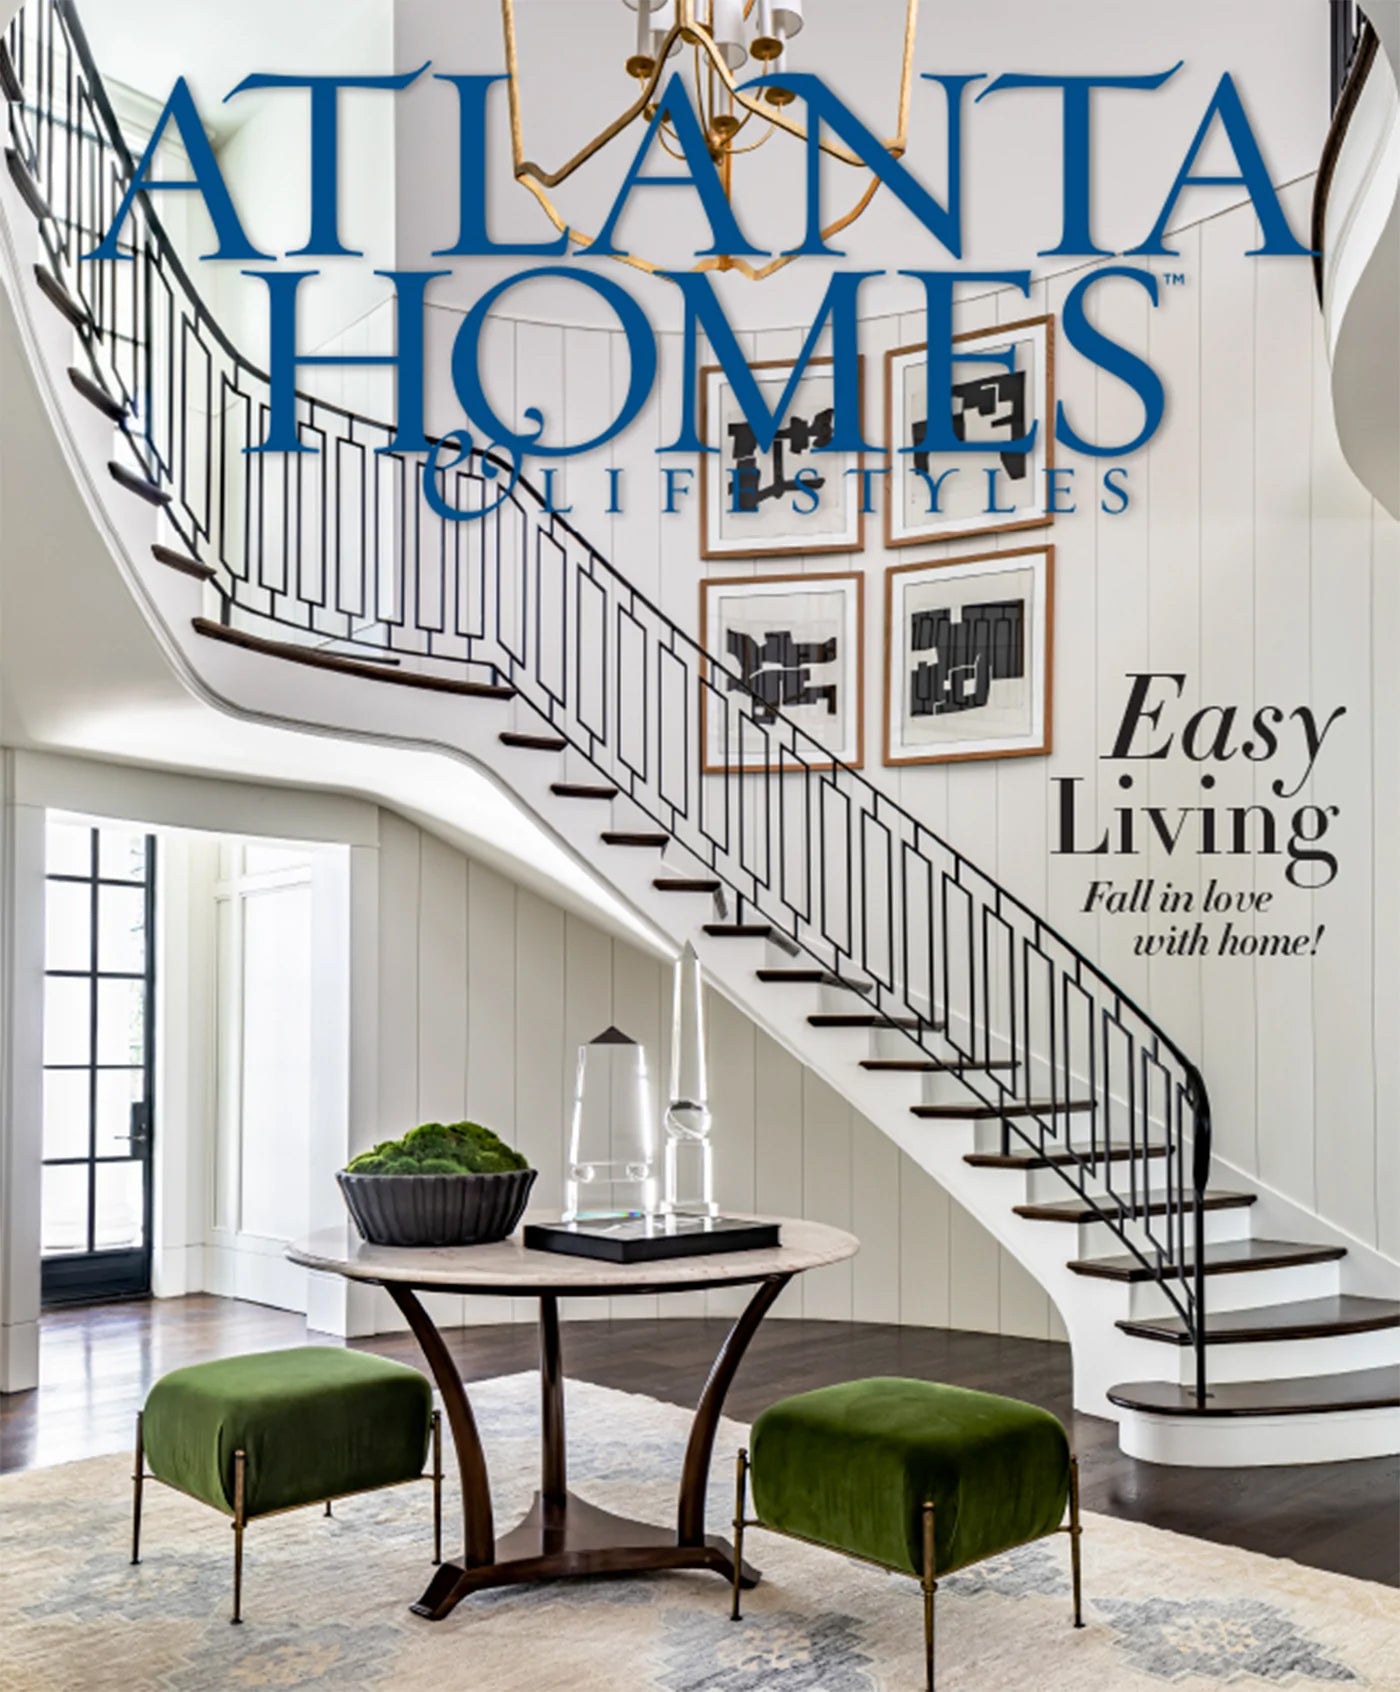 Kitchen Envy - Atlanta Homes and Lifestyles